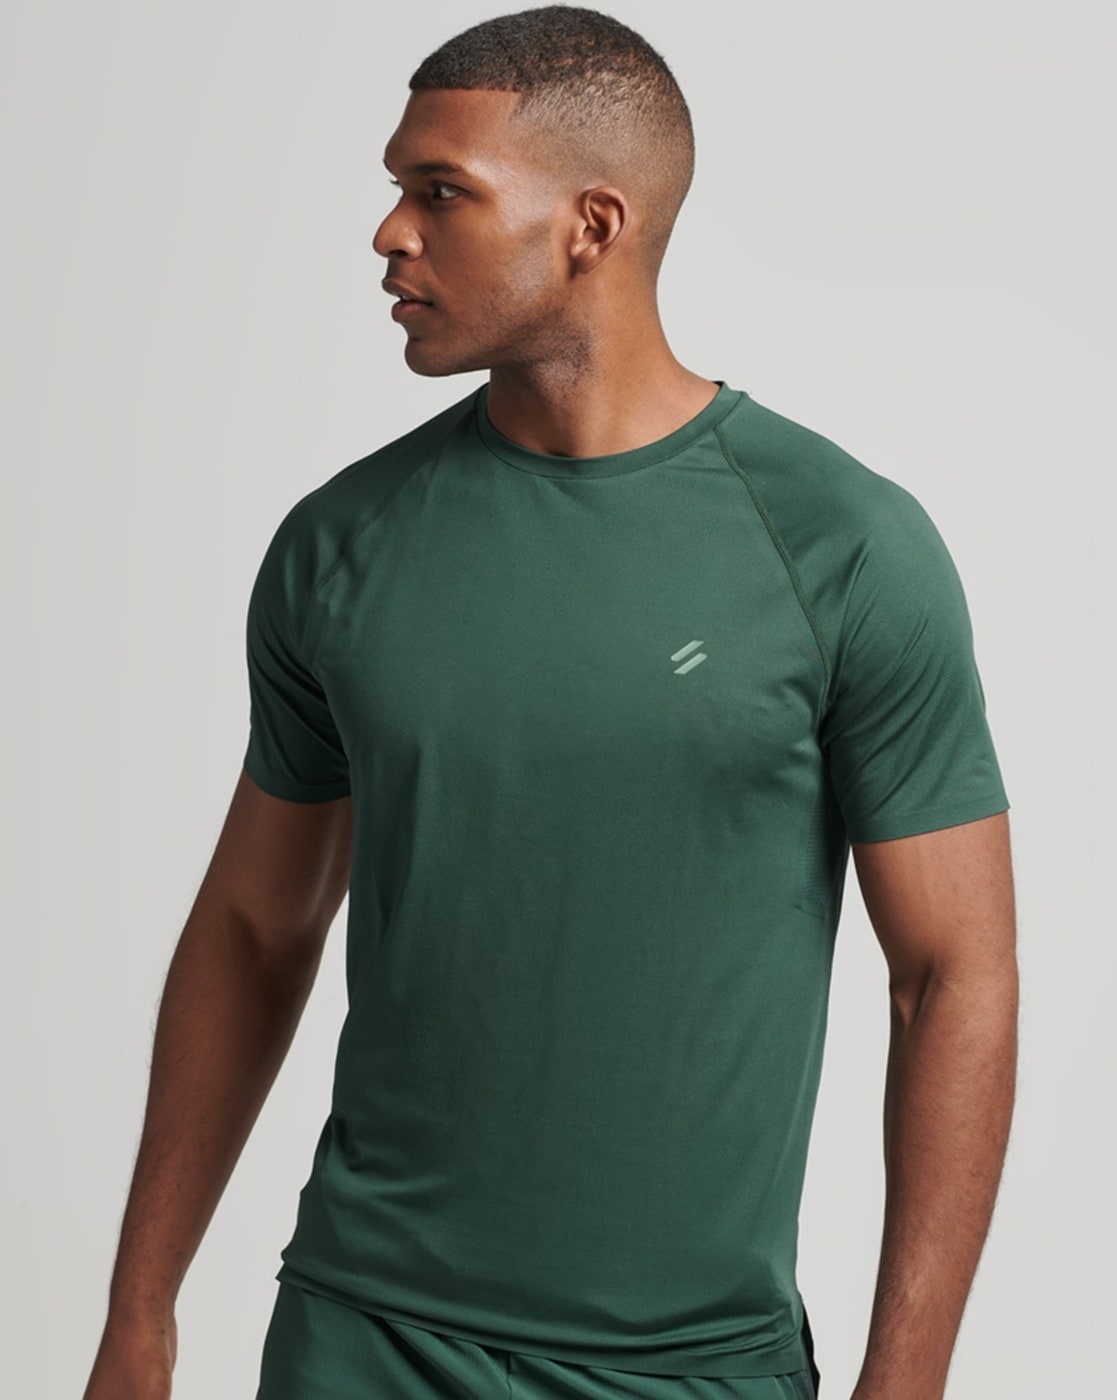 Buy Green Tshirts for Men Online | Ajio.com